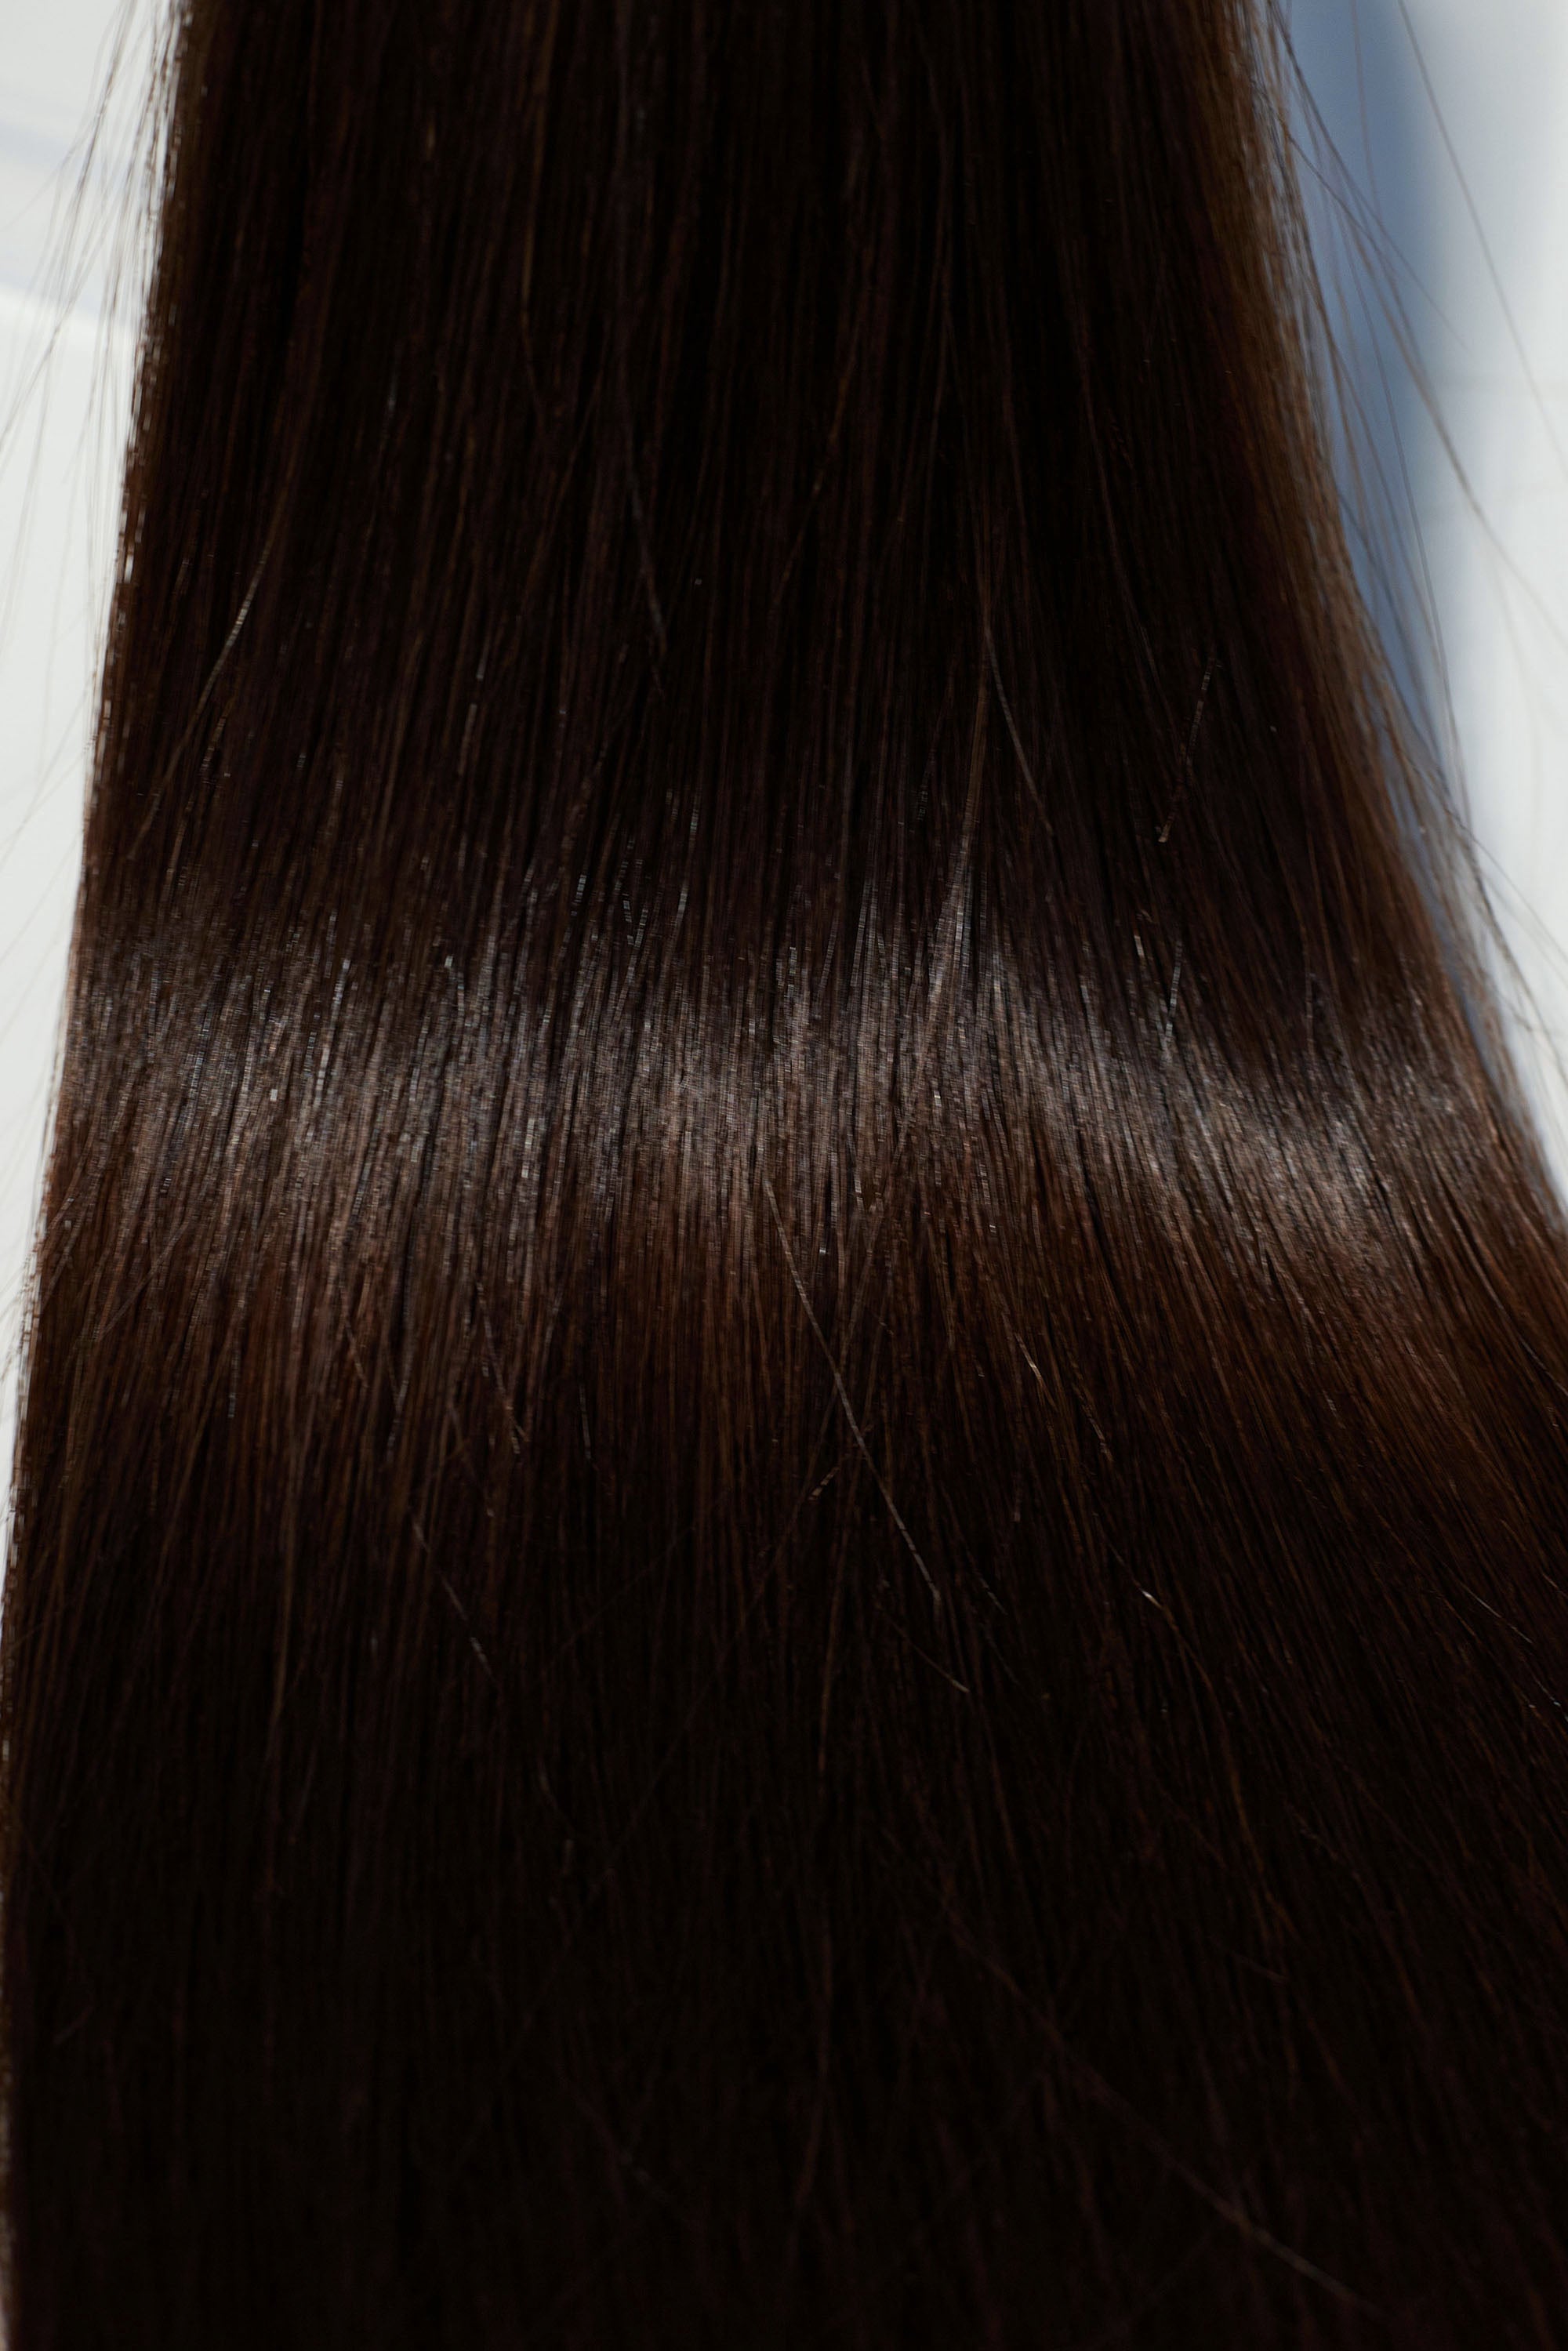 Behair professional Keratin Tip "Premium" 20" (50cm) Natural Straight Dark Coffee Brown #2 - 25g (Standart - 0.7g each pcs) hair extensions